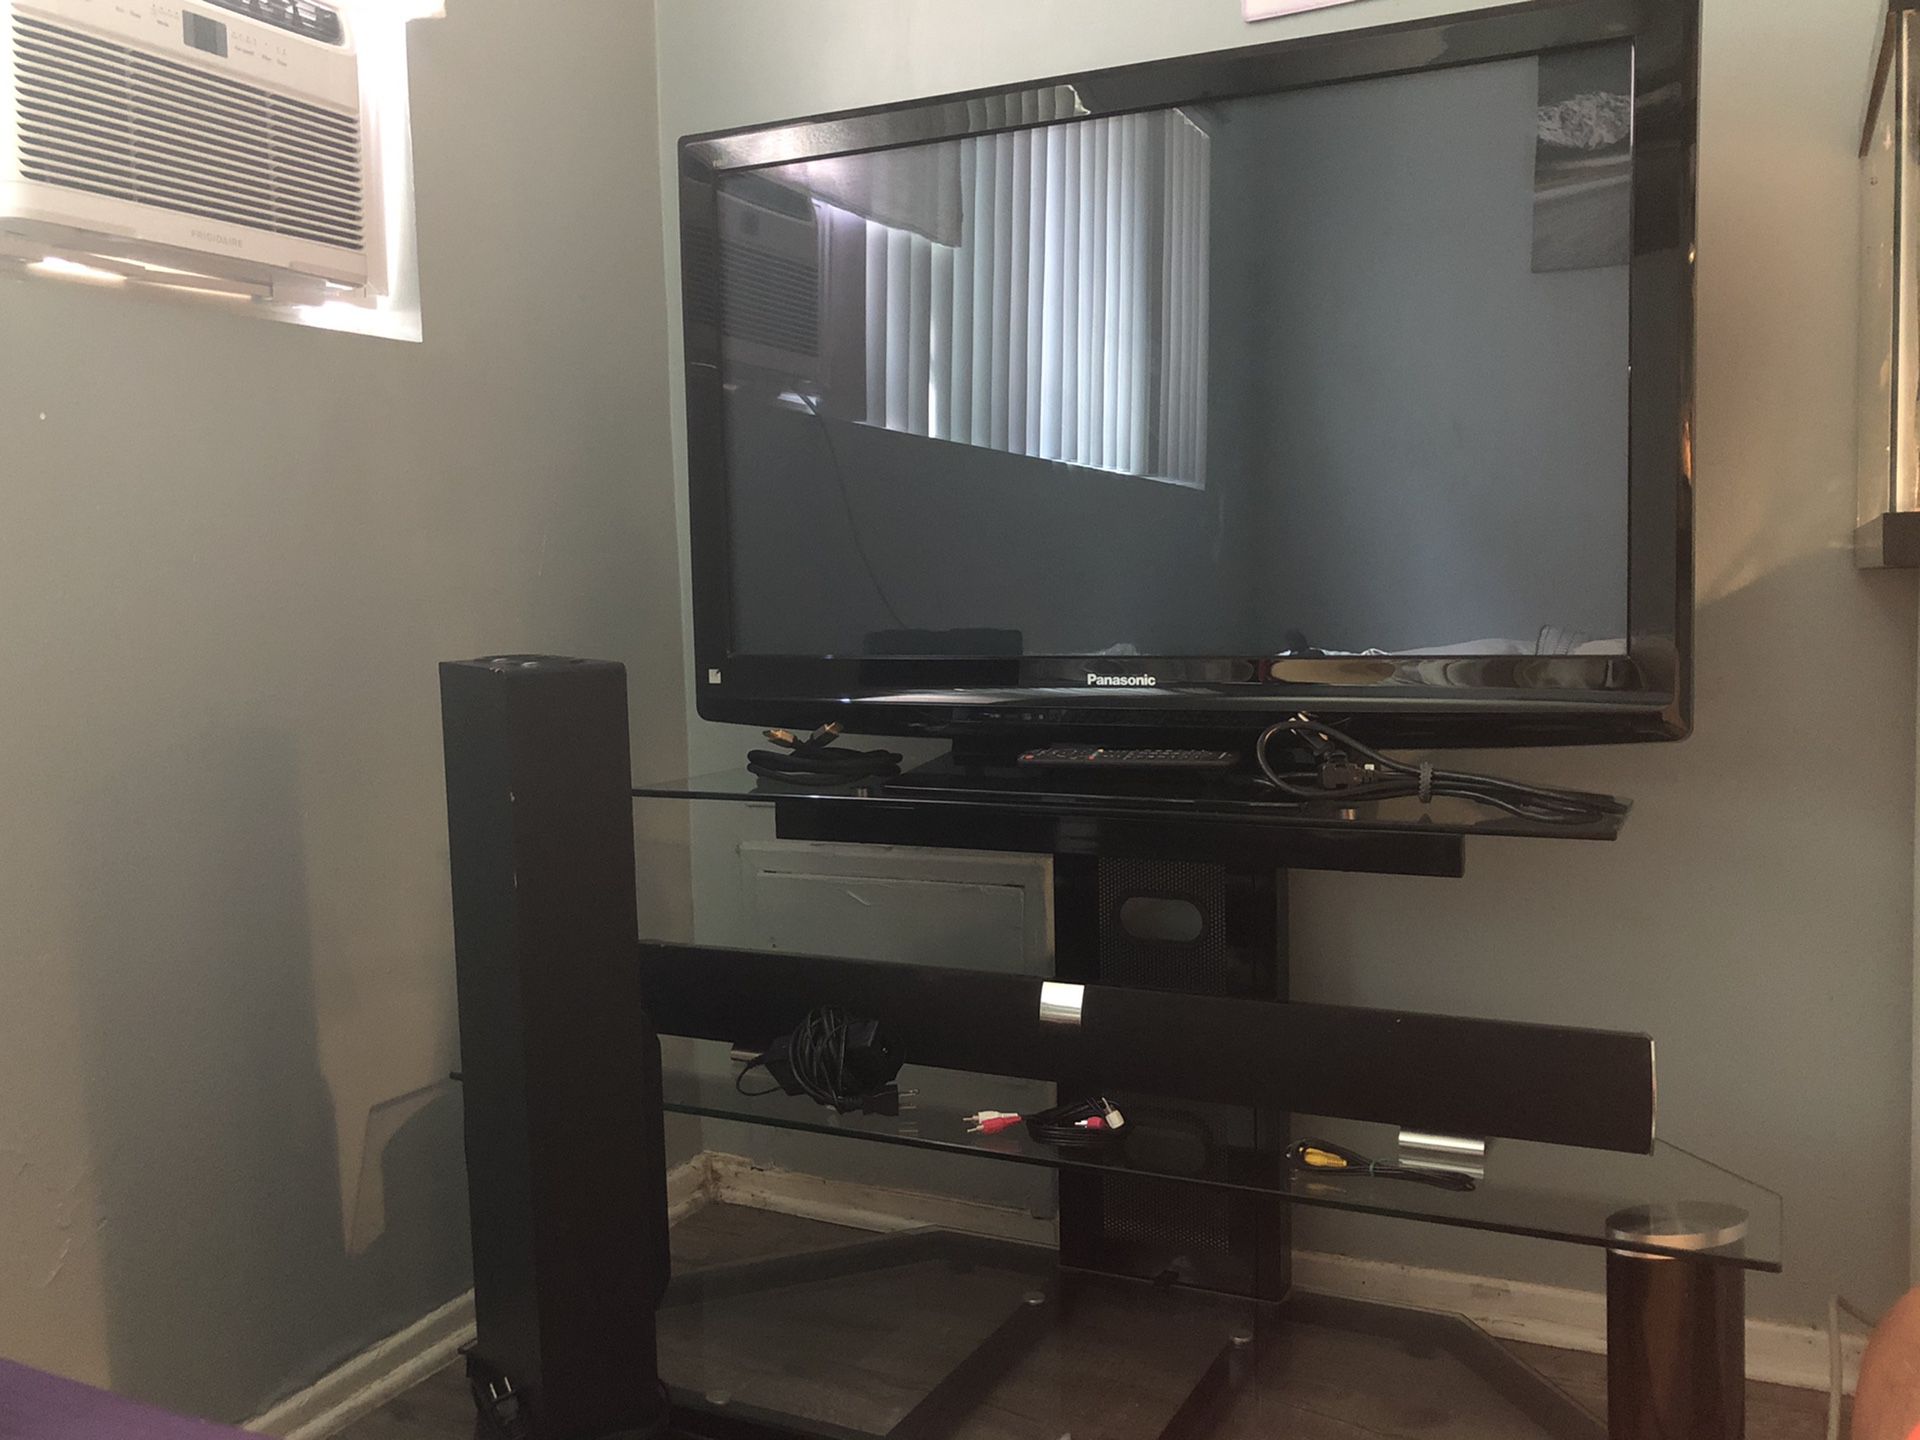 42” Panasonic Plasma HDTV, Sound Bar w/ Sub, and Glass TV Stand